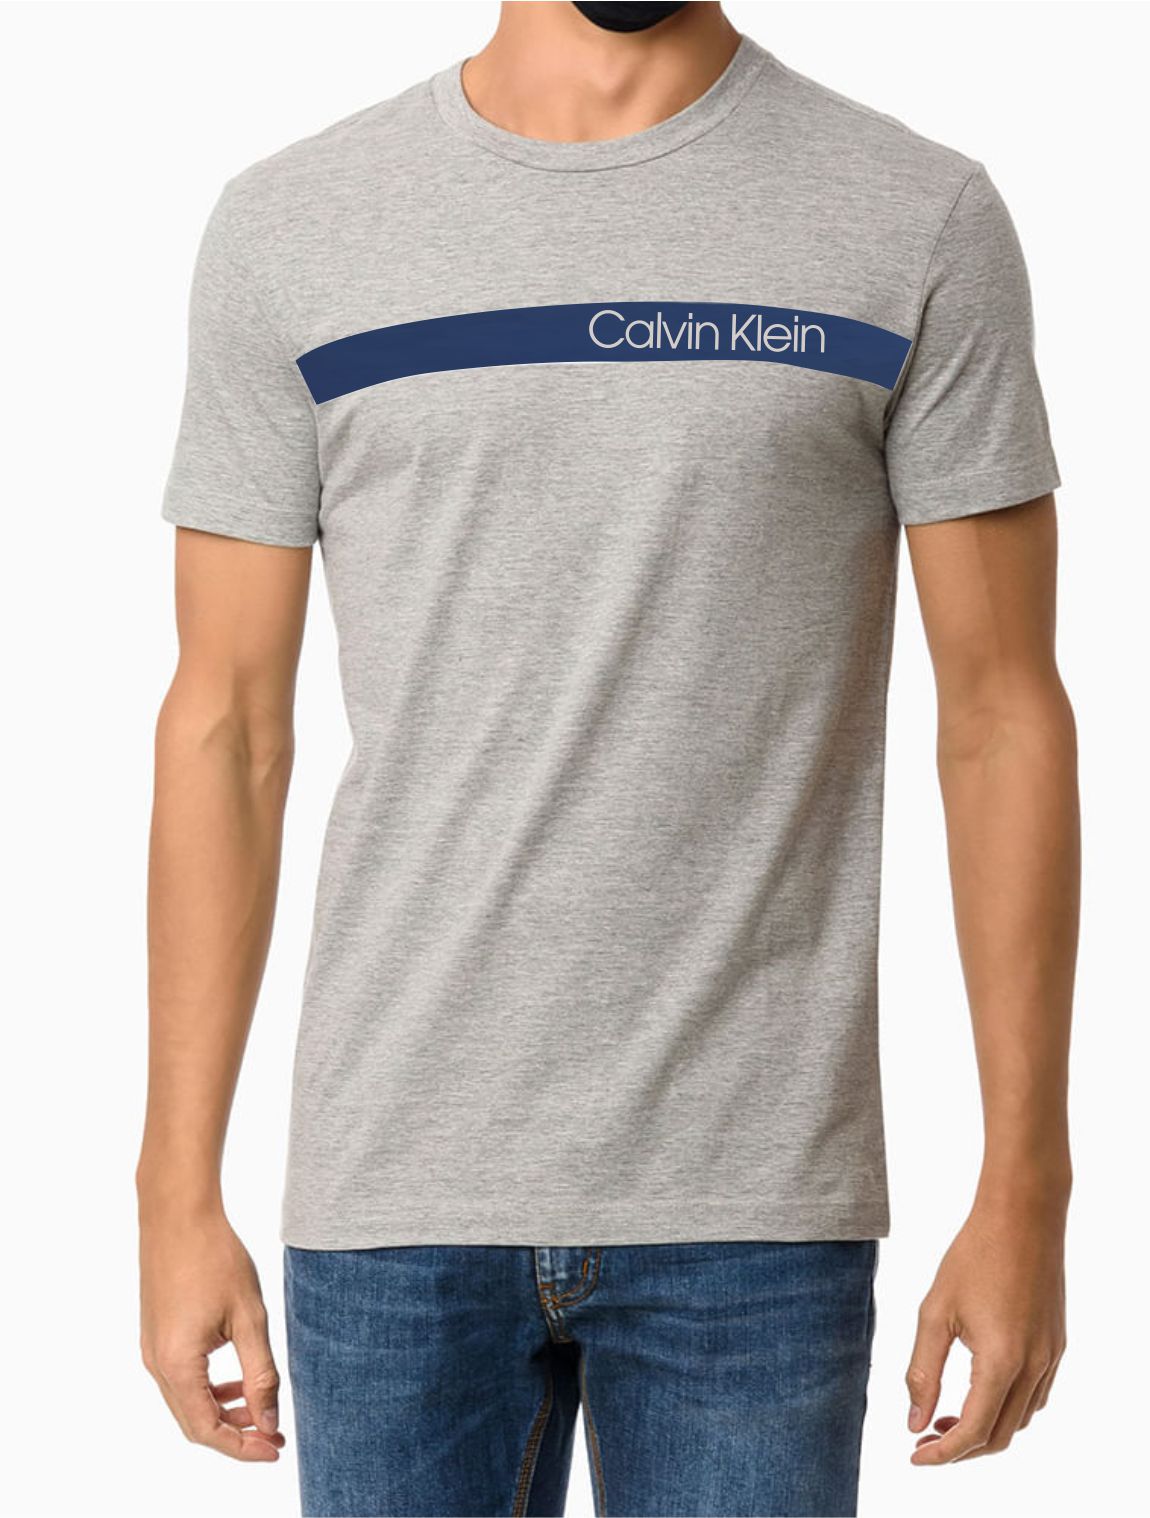 Camiseta Calvin Klein masculina logo 